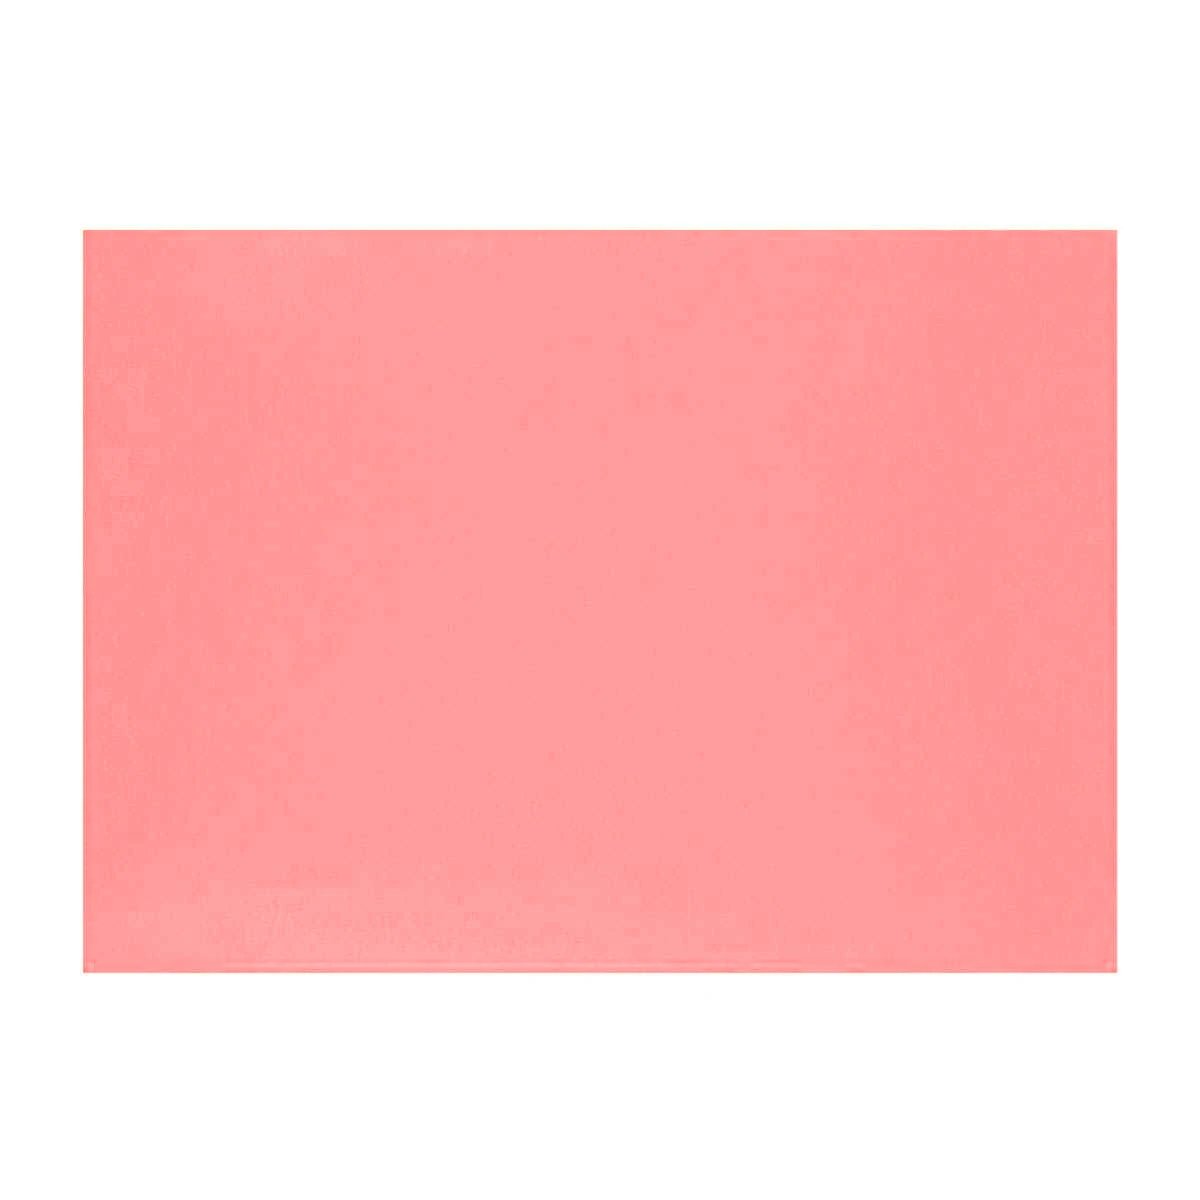 C4 Cerise Pink 120gsm Wallet Peel & Seal Envelopes [Qty 250] 229 x 324mm - All Colour Envelopes